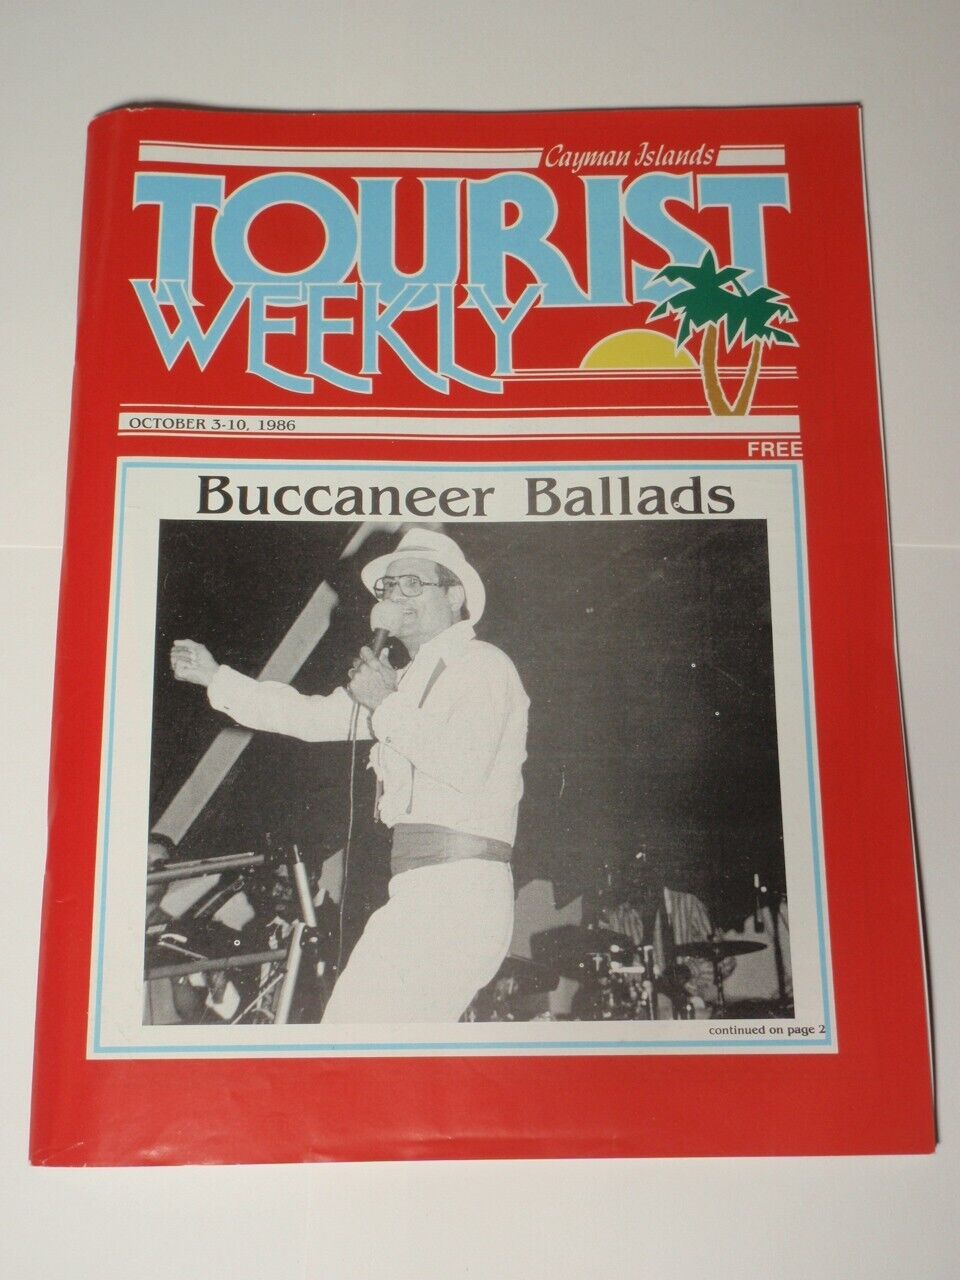 Vintage 1986 Cayman Islands Tourist Weekly Travel Magazine